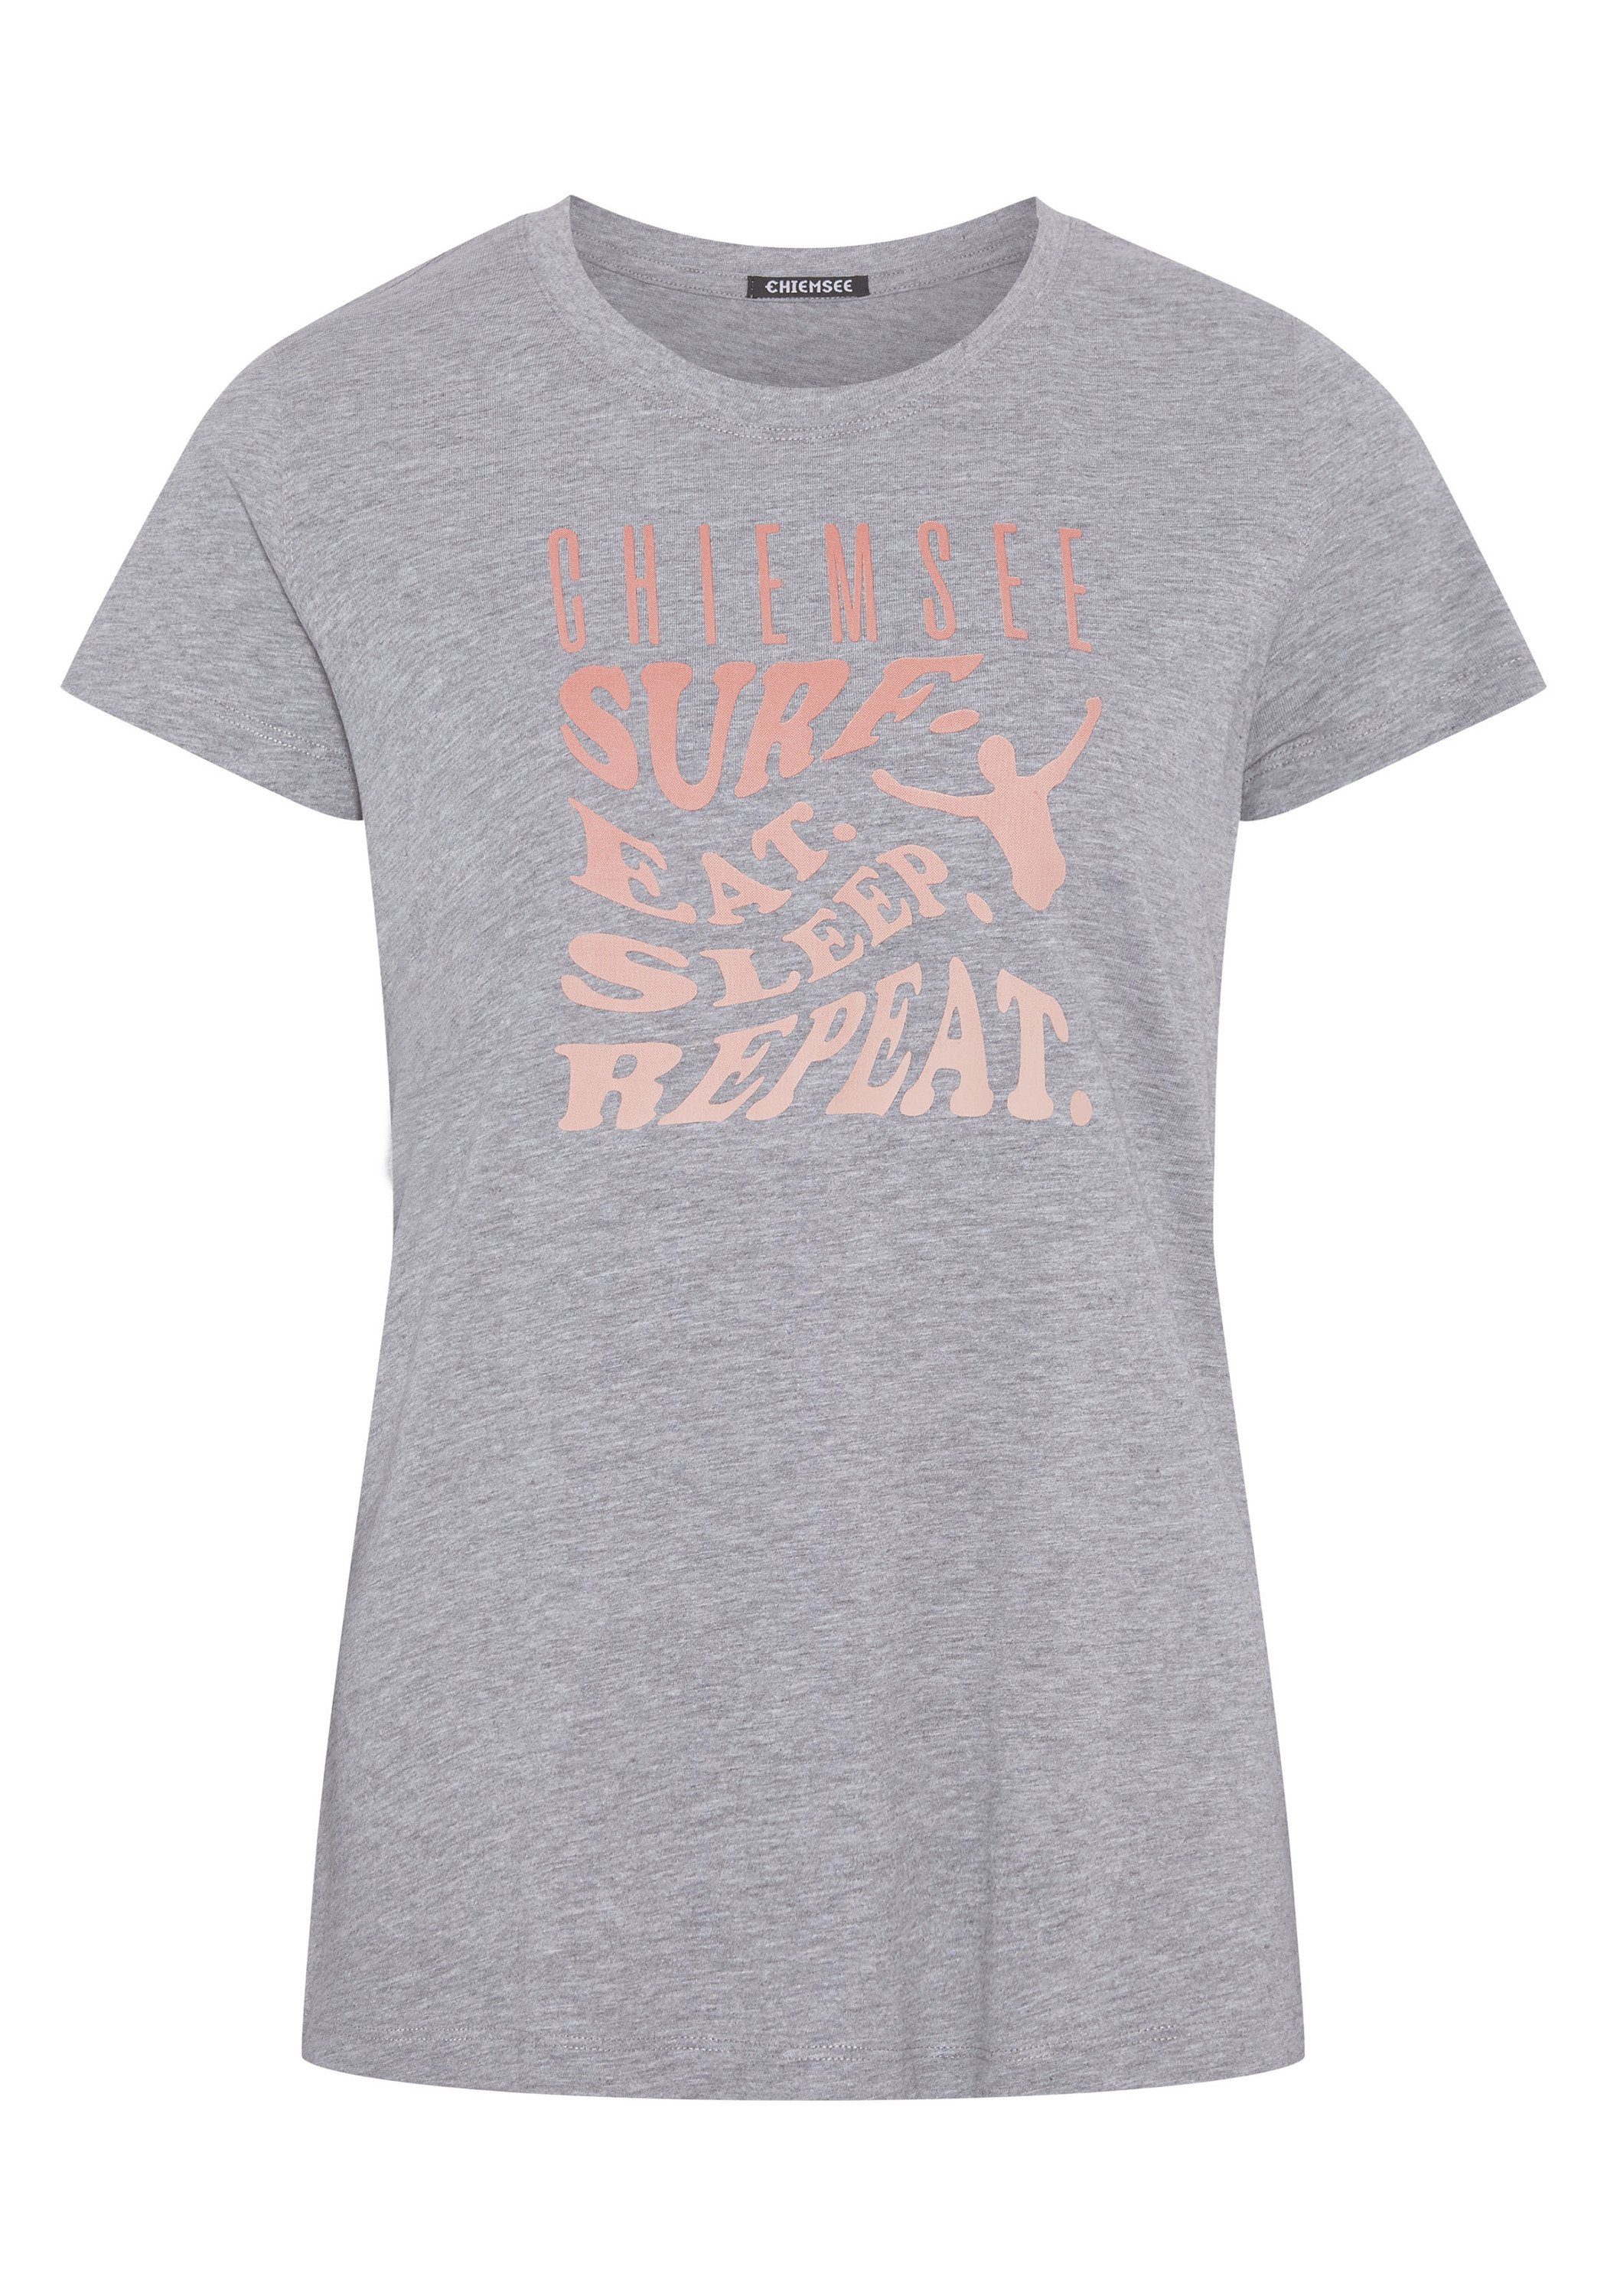 Chiemsee Gray T-Shirt mit Print-Shirt Schriftzug Neutral 1 17-4402M Melange